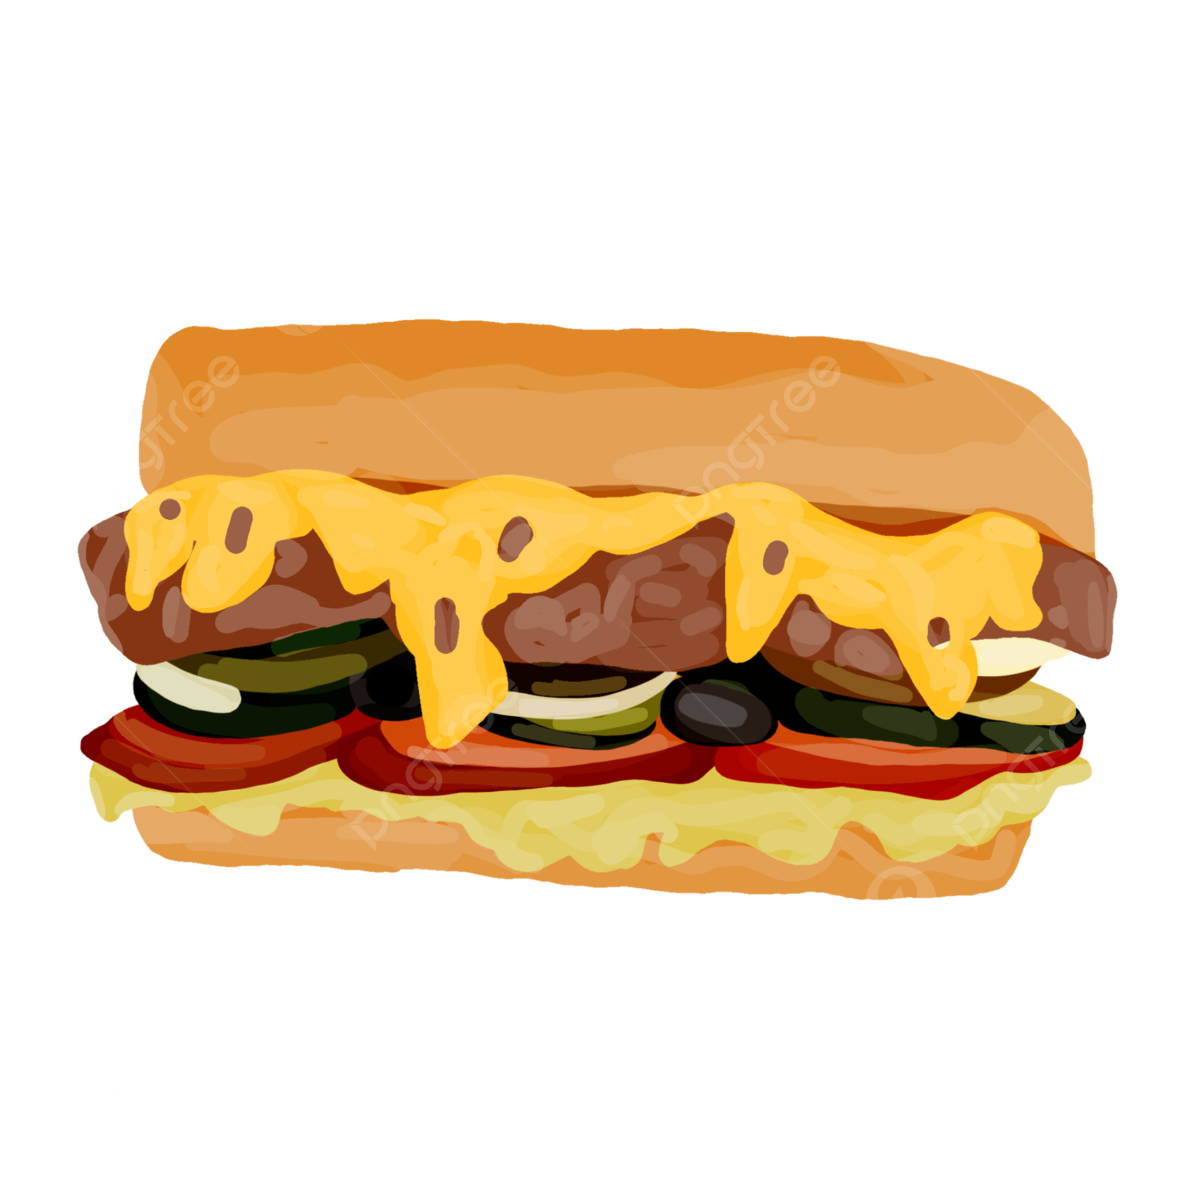 Subway Sandwich PNG Transparent Image Free Download